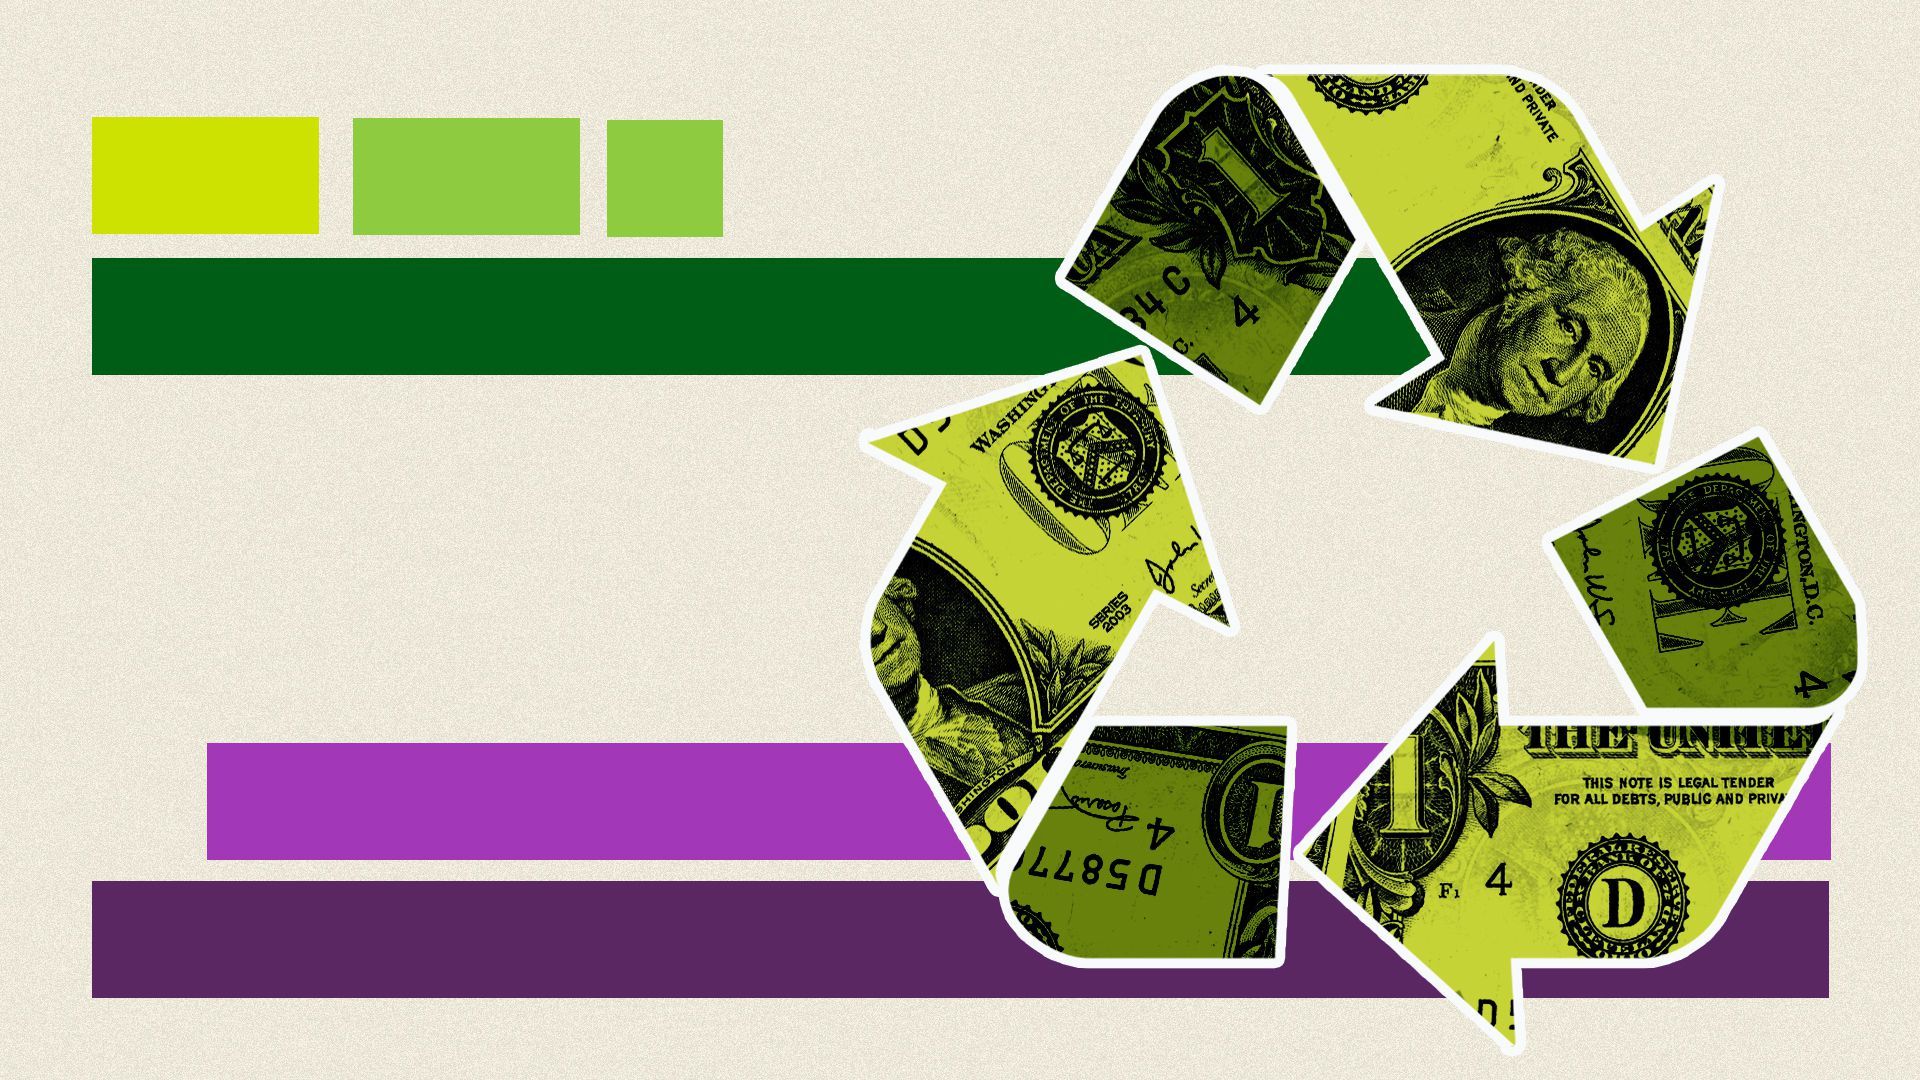 Illustration of a recycling symbol made of dollar bills.